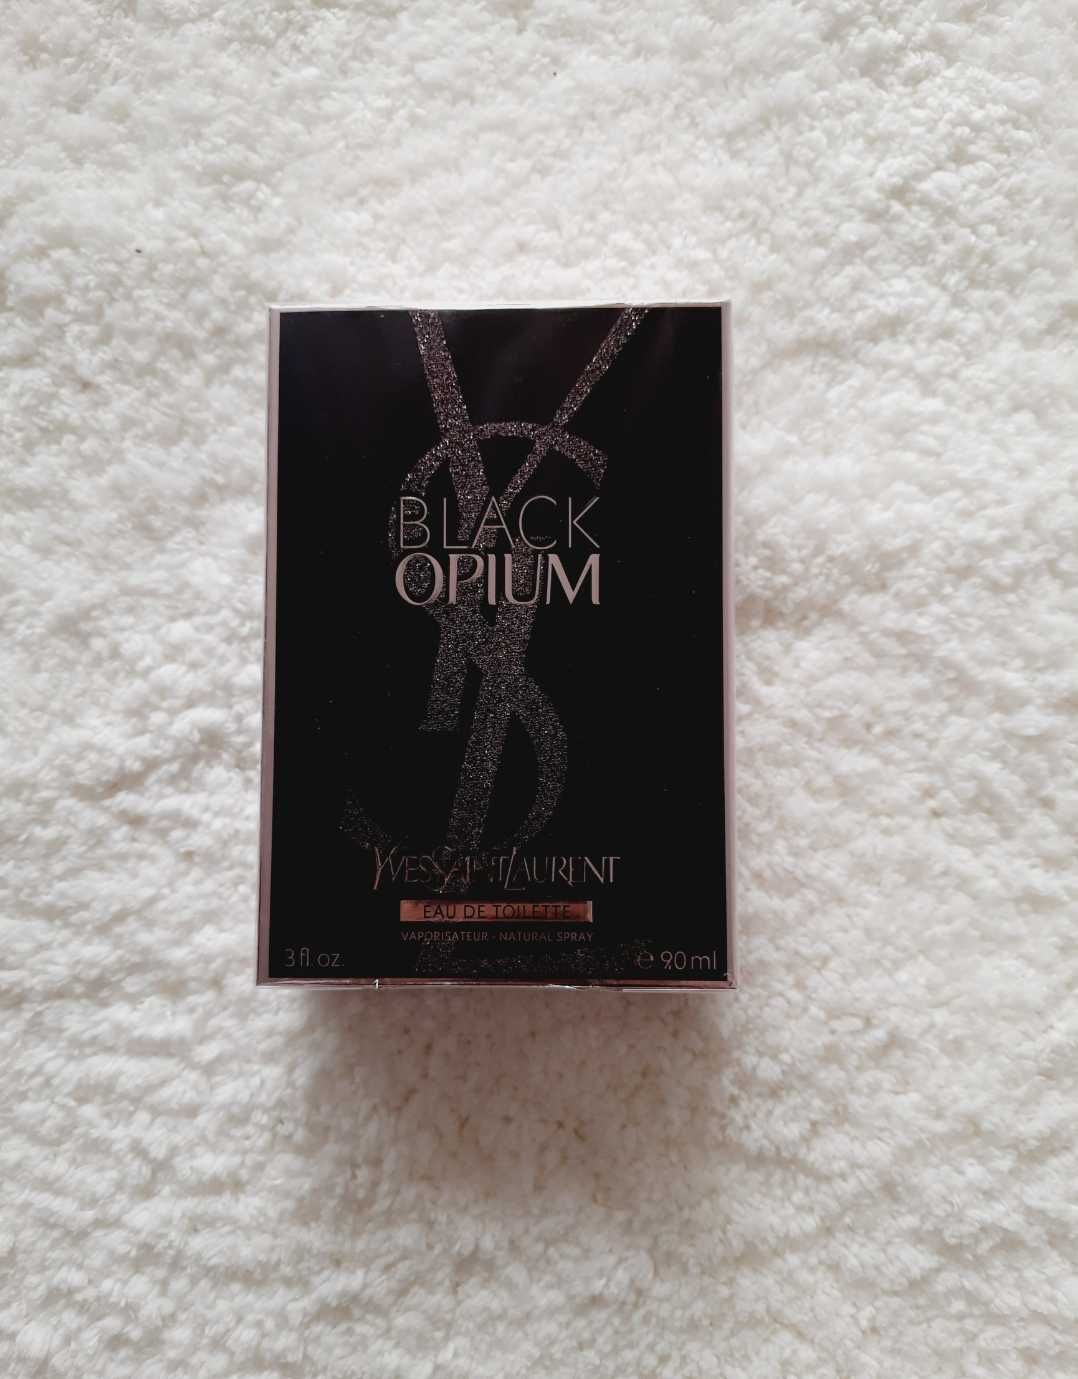 YVES SAINT LAURENT Black Opium 90мл блек опіум оригінал духи парфум